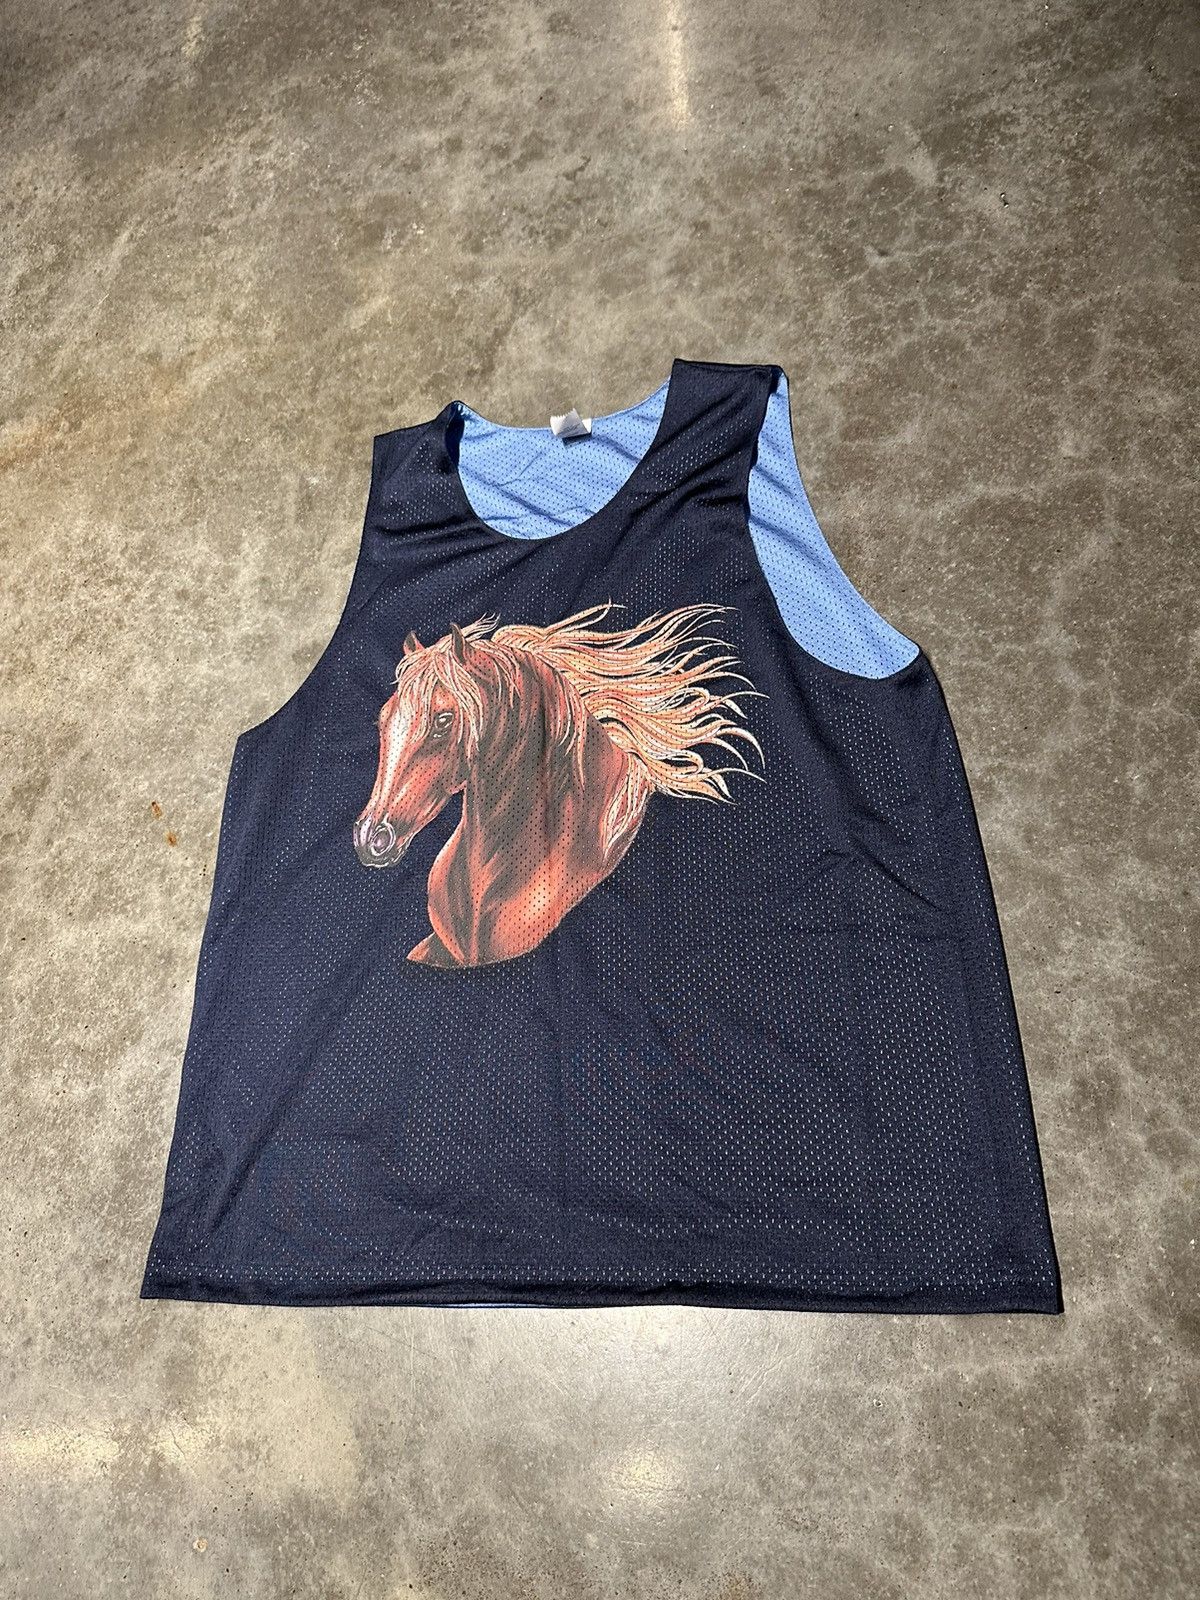 Supreme Supreme Mustang Reversible Basketball Jersey | Grailed